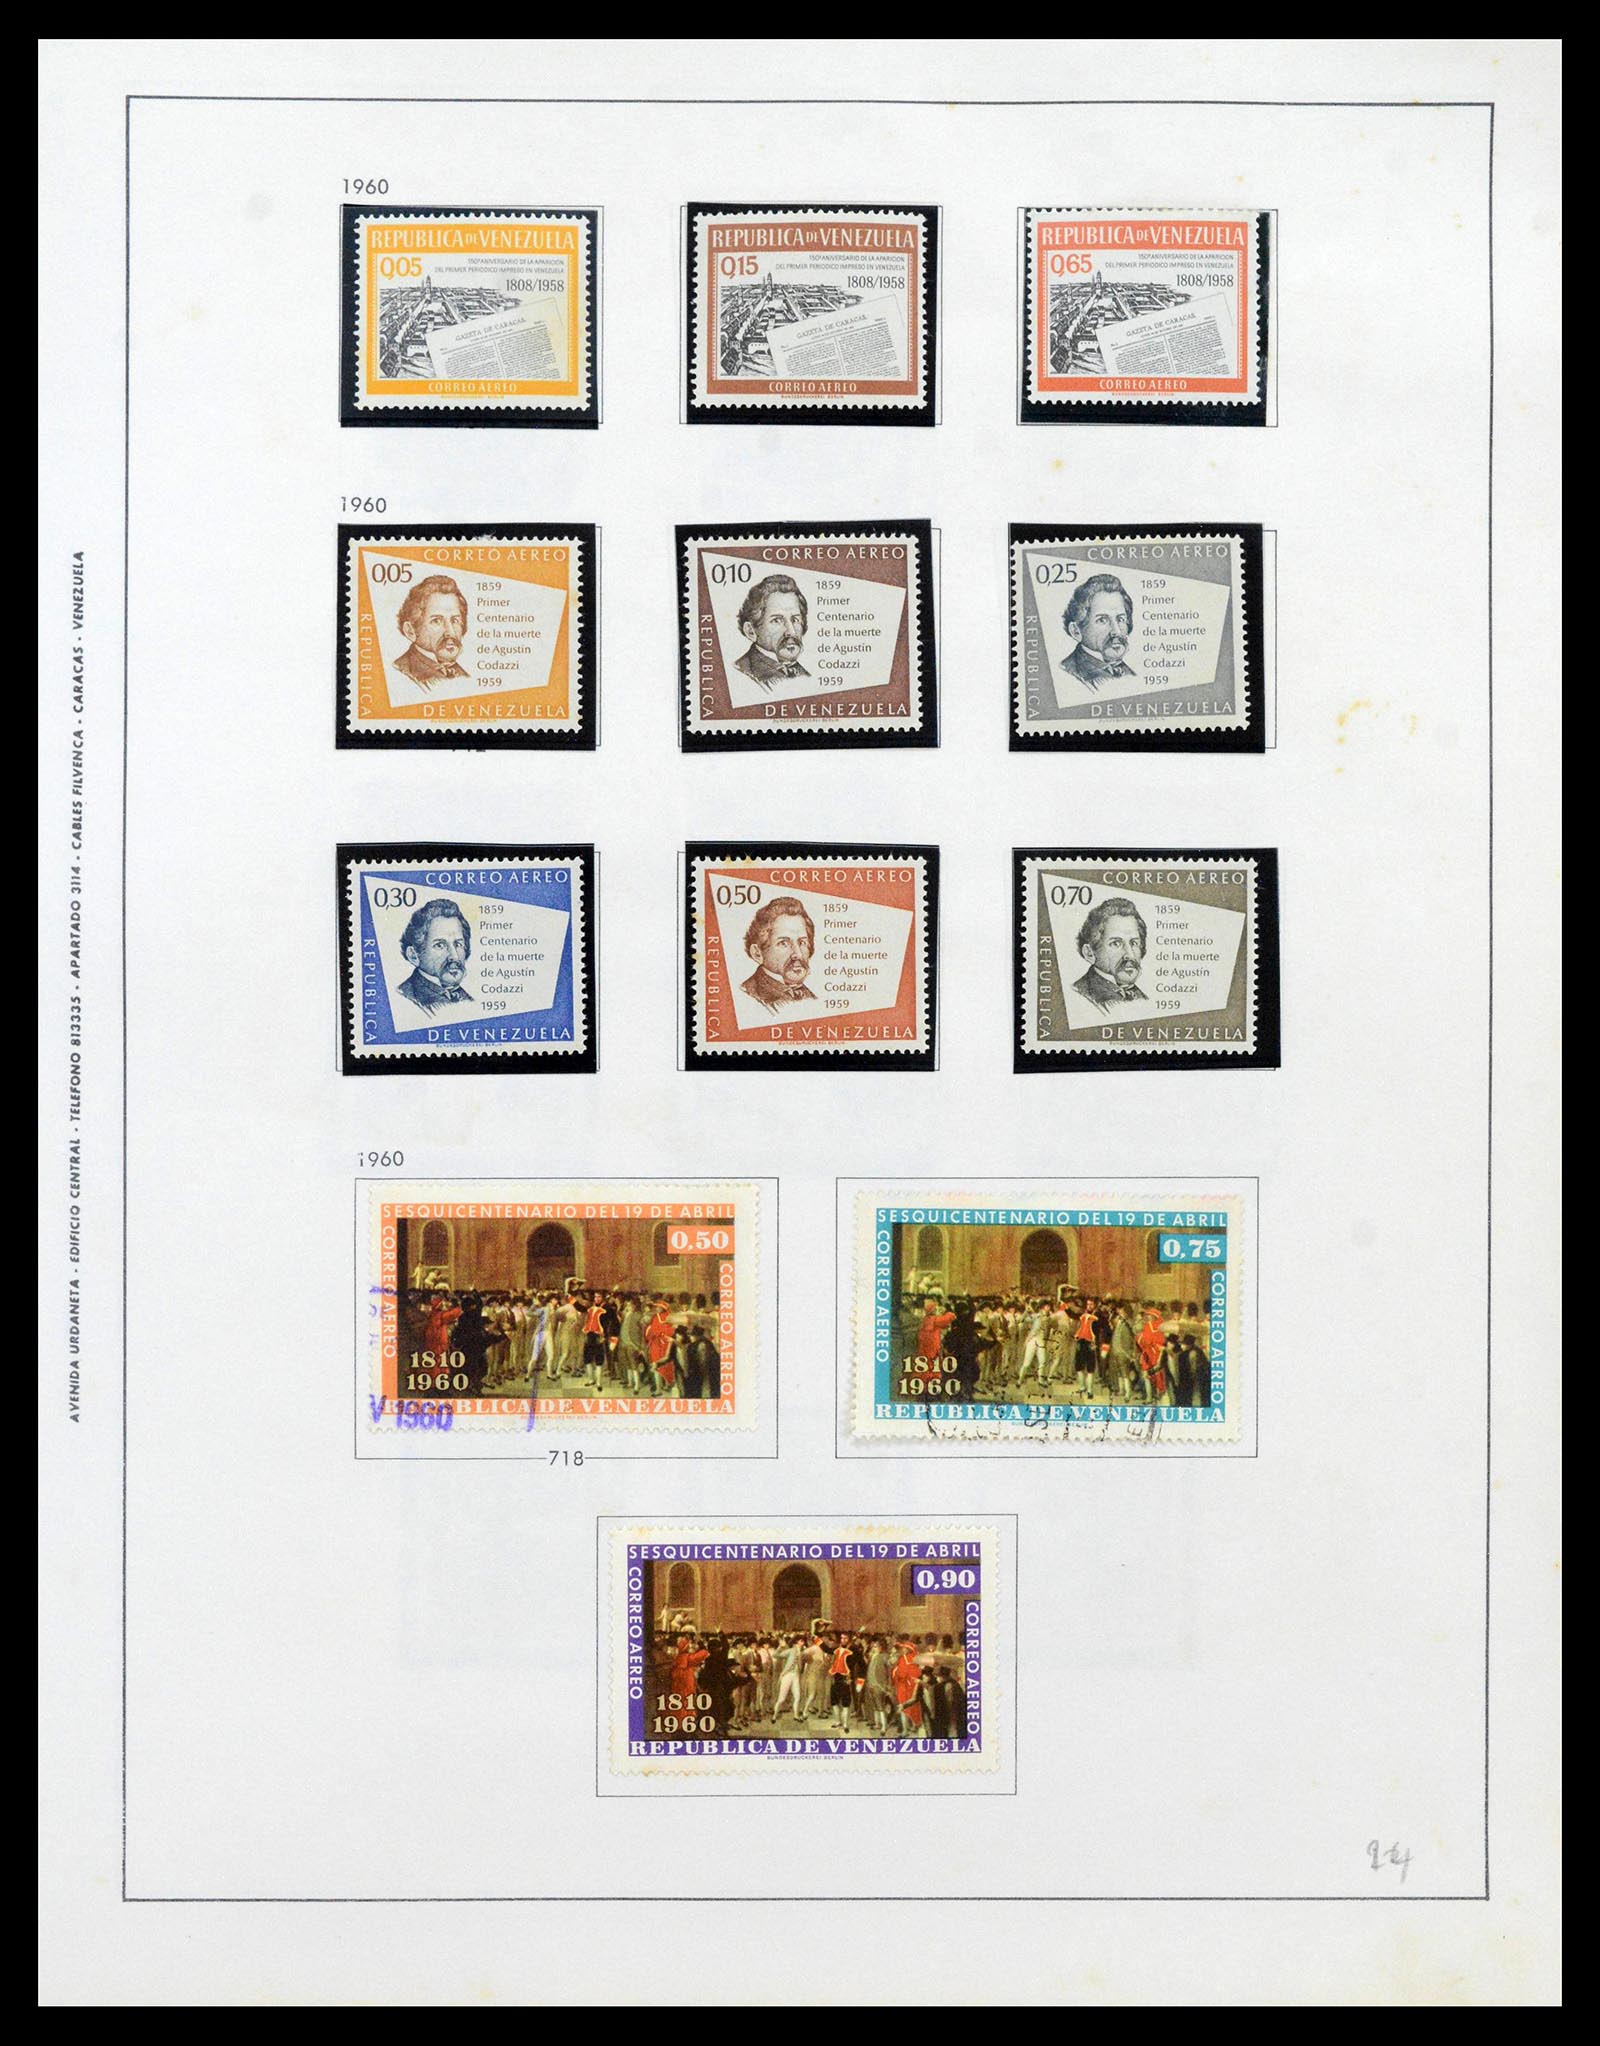 39436 0045 - Stamp collection 39436 Venezuela 1859-1985.